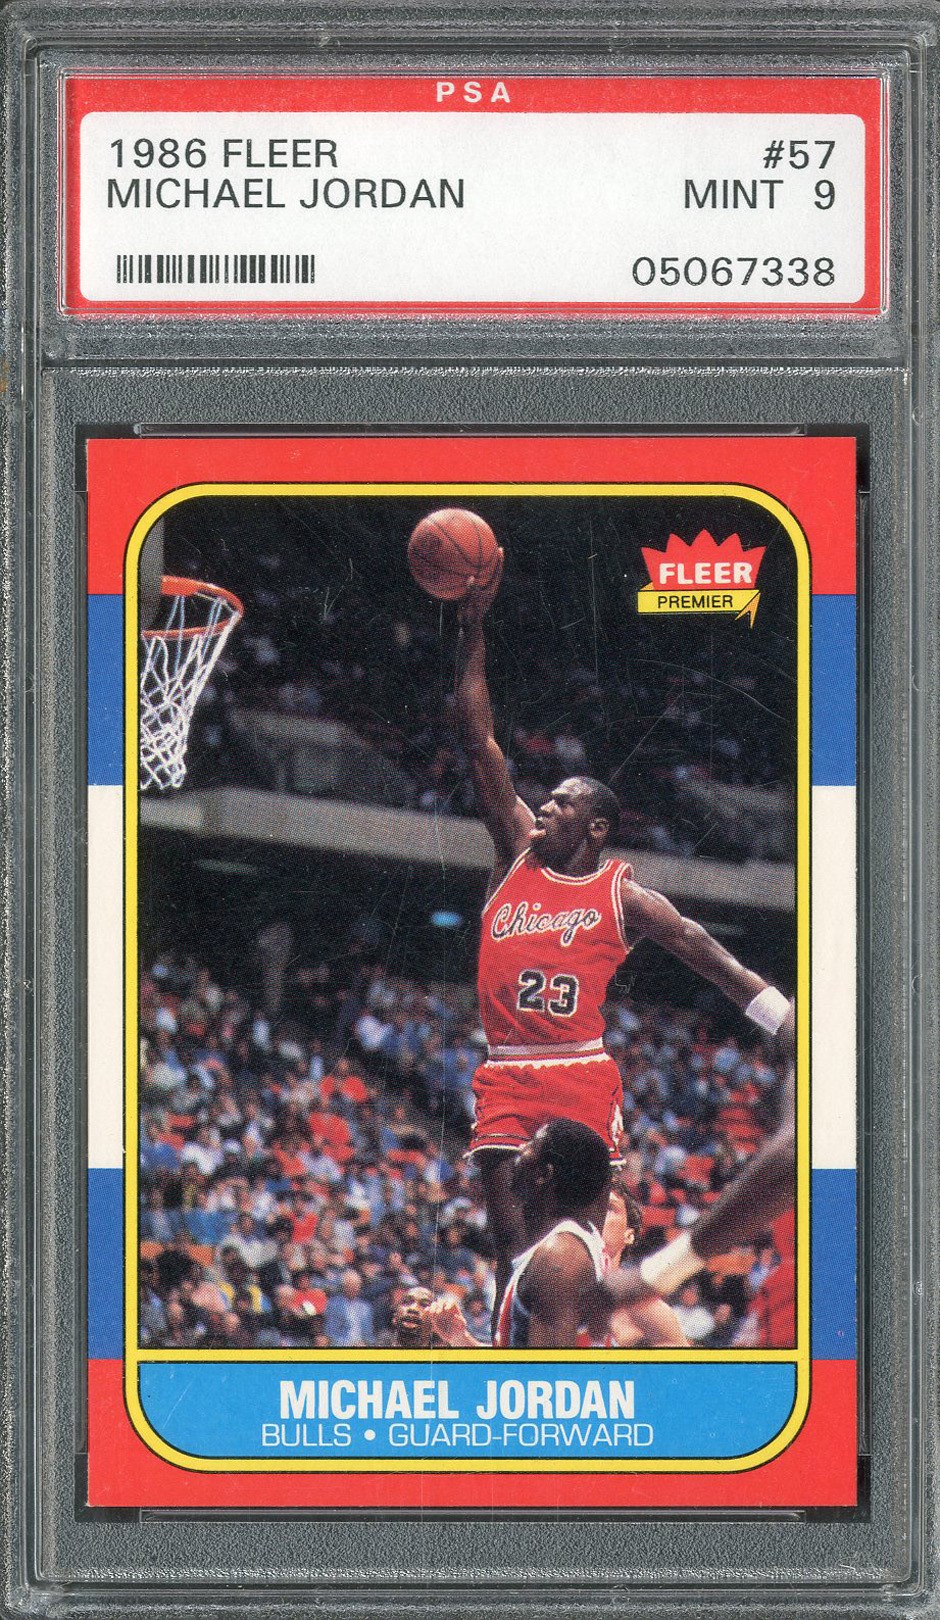 - 1986 Fleer Michael Jordan #57 Rookie PSA MINT 9